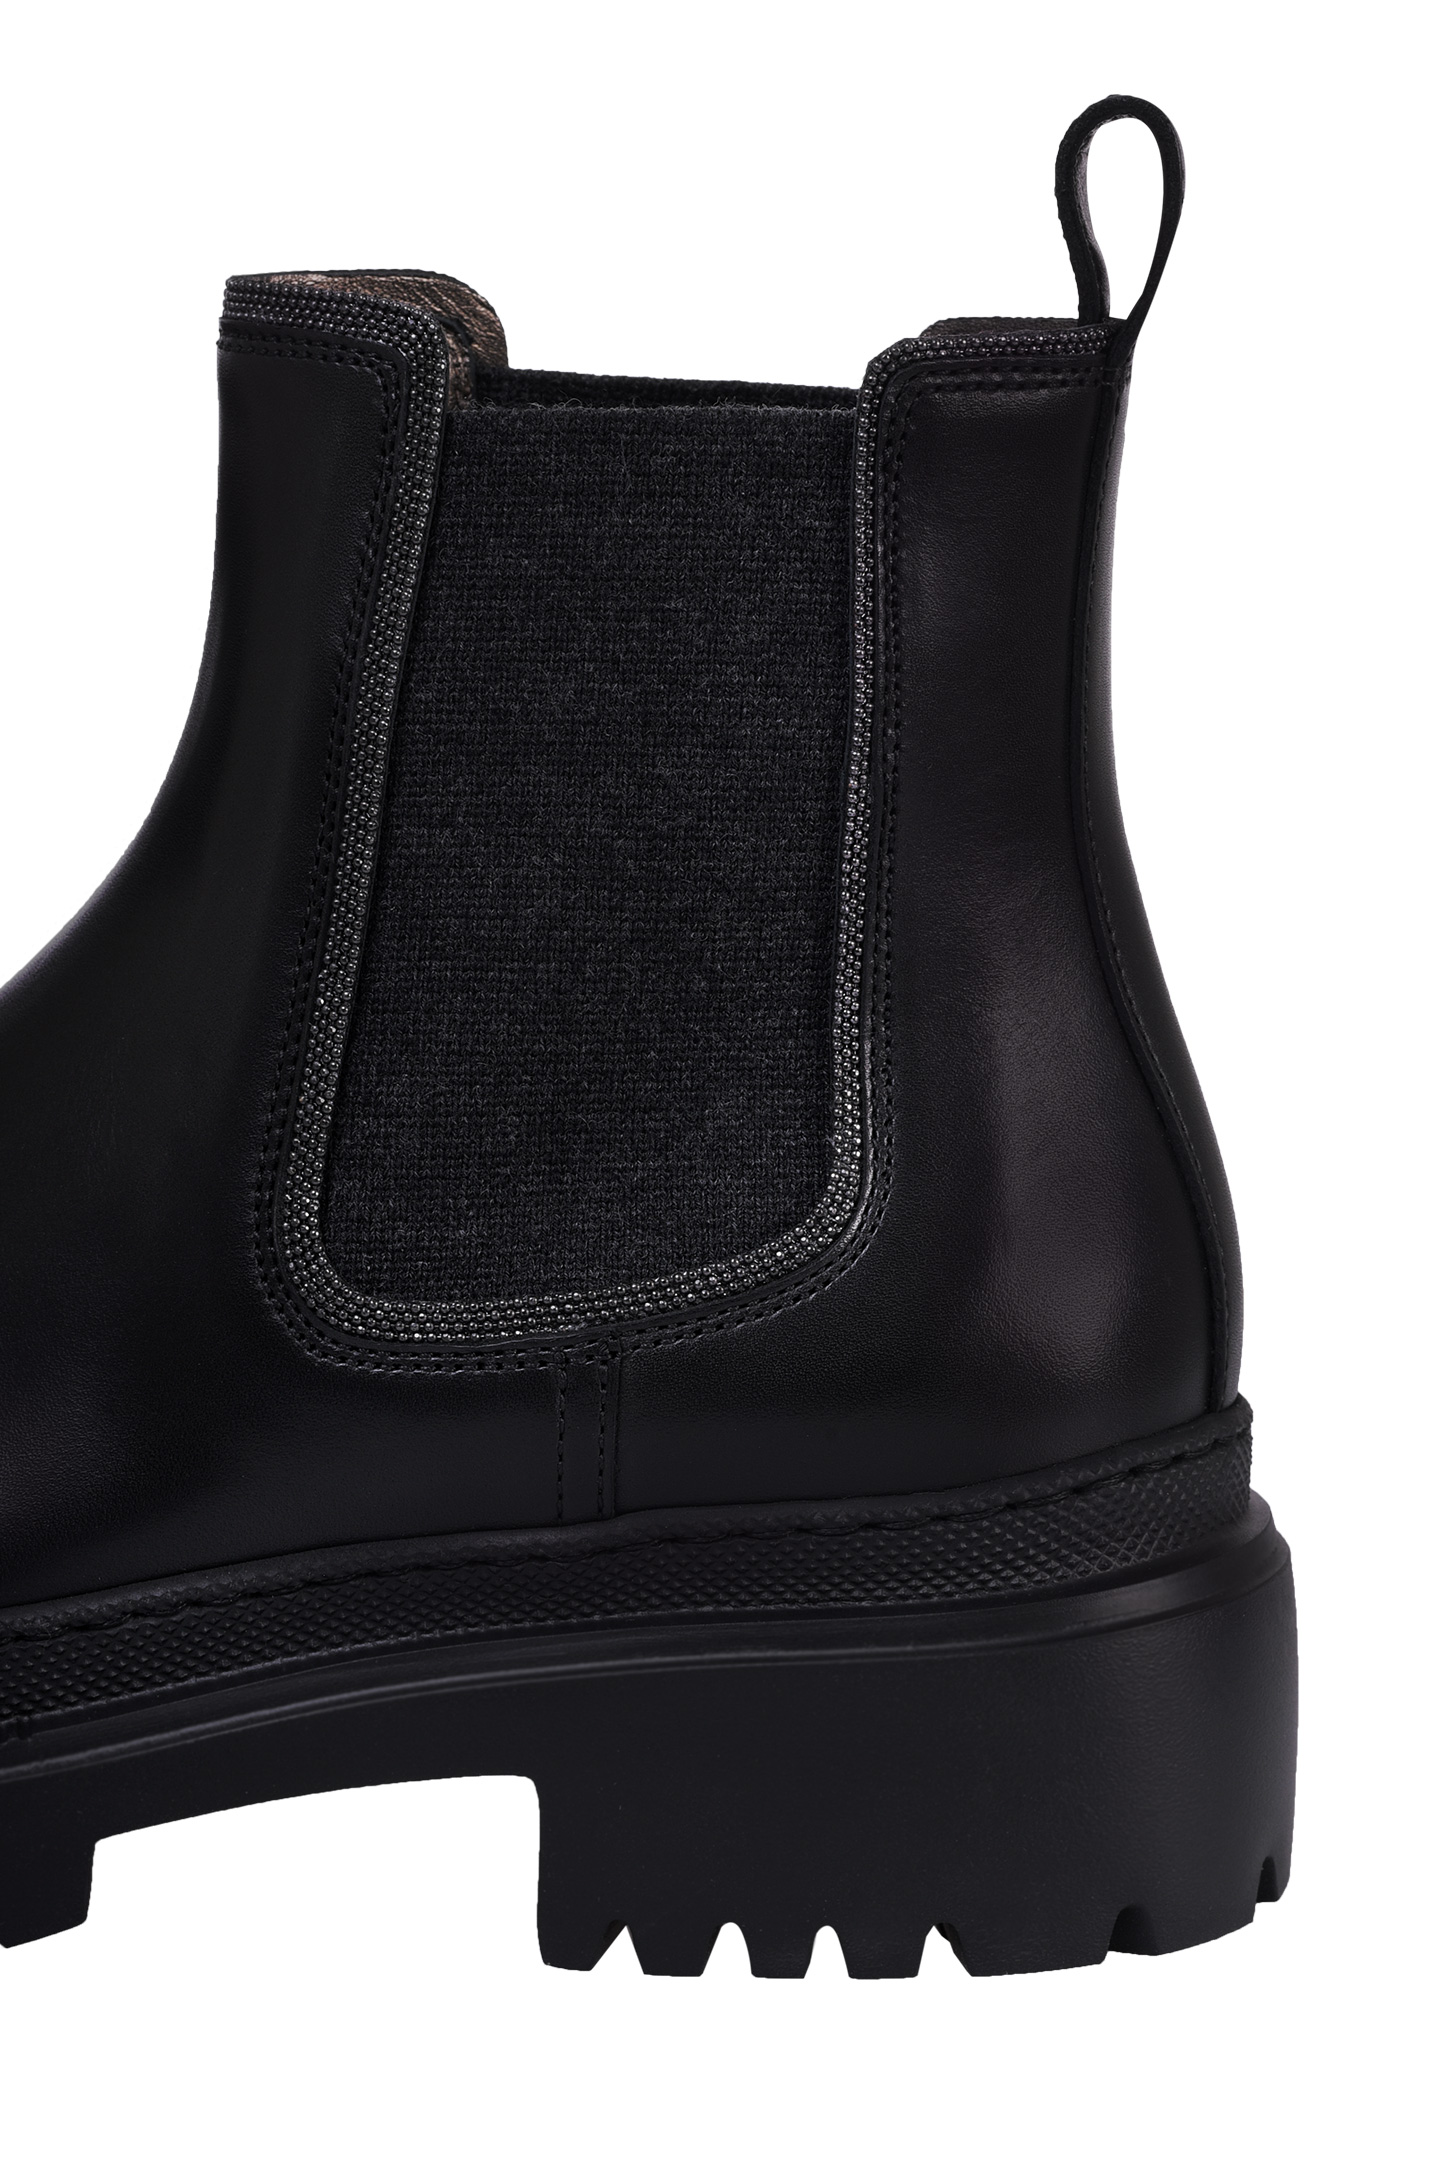 Ботинки BRUNELLO  CUCINELLI MZBSG2072, цвет: Черный, Женский